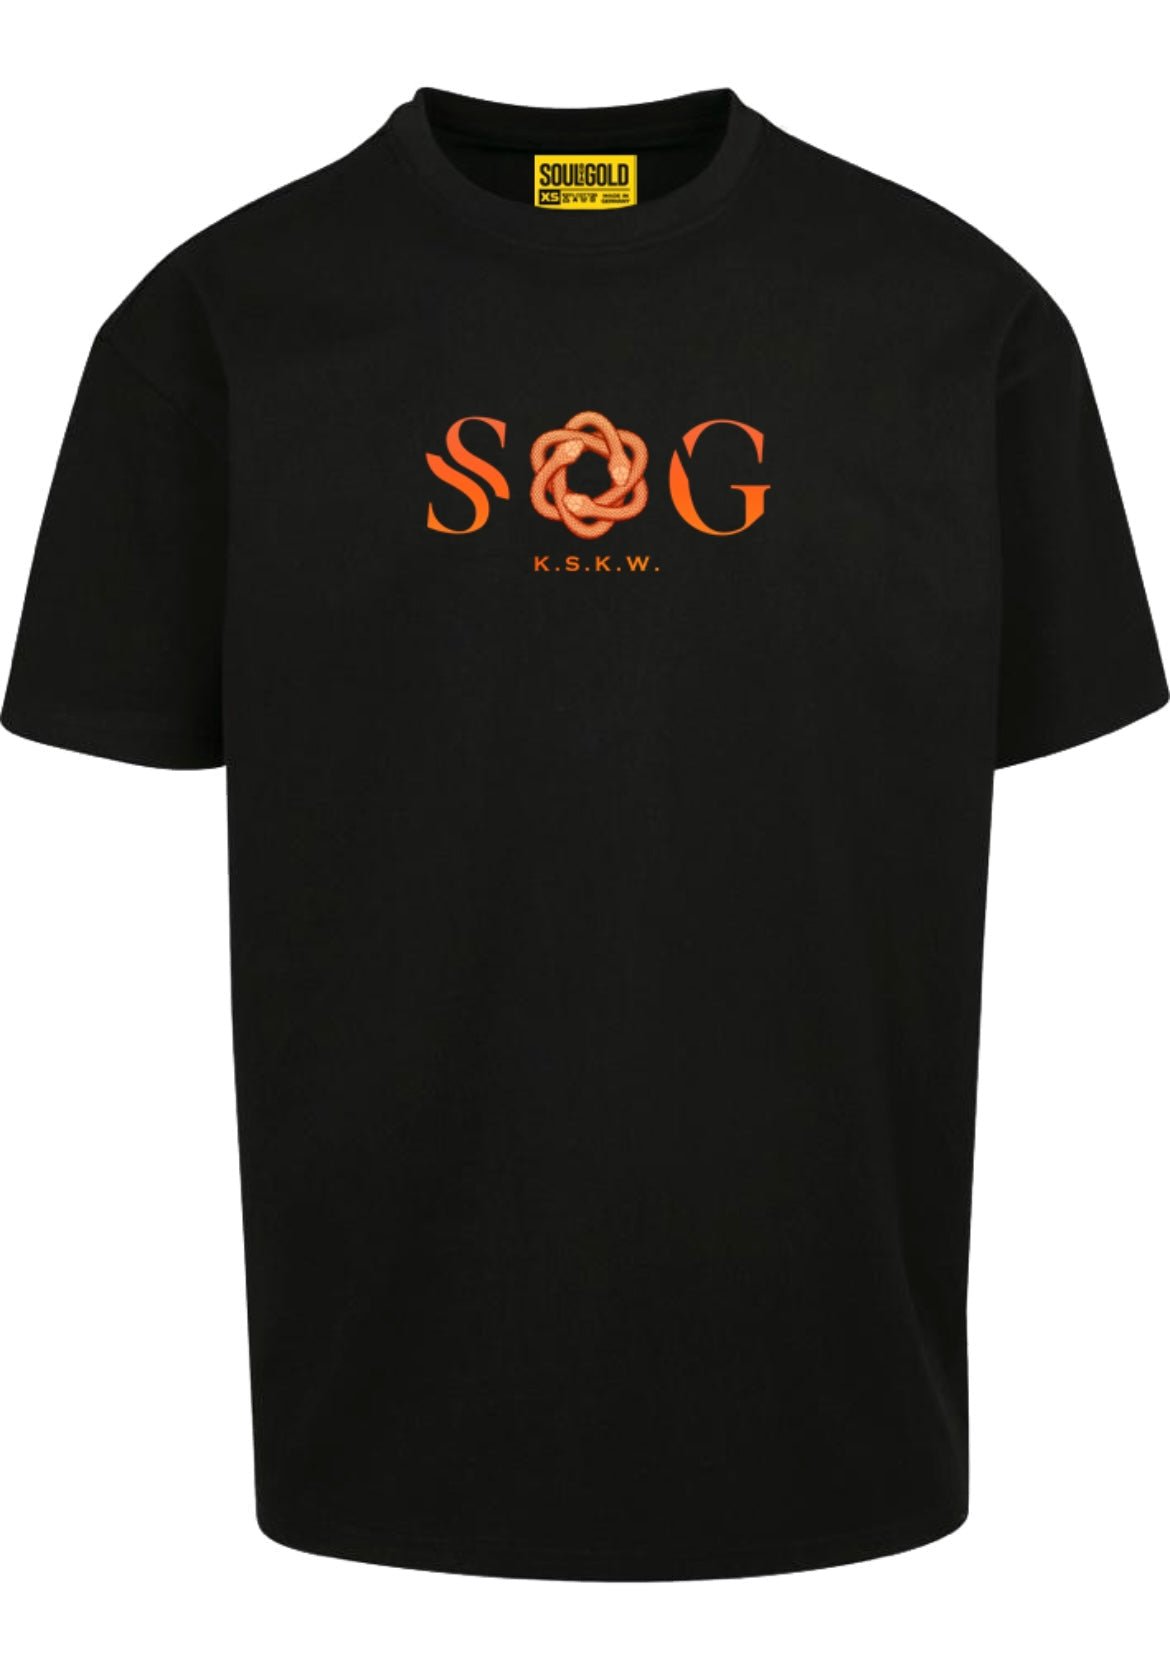 Soul Ova Gold Apparel & Accessories Heartless(Black w/Orange Citrine Print) Heavyweight T-shirt